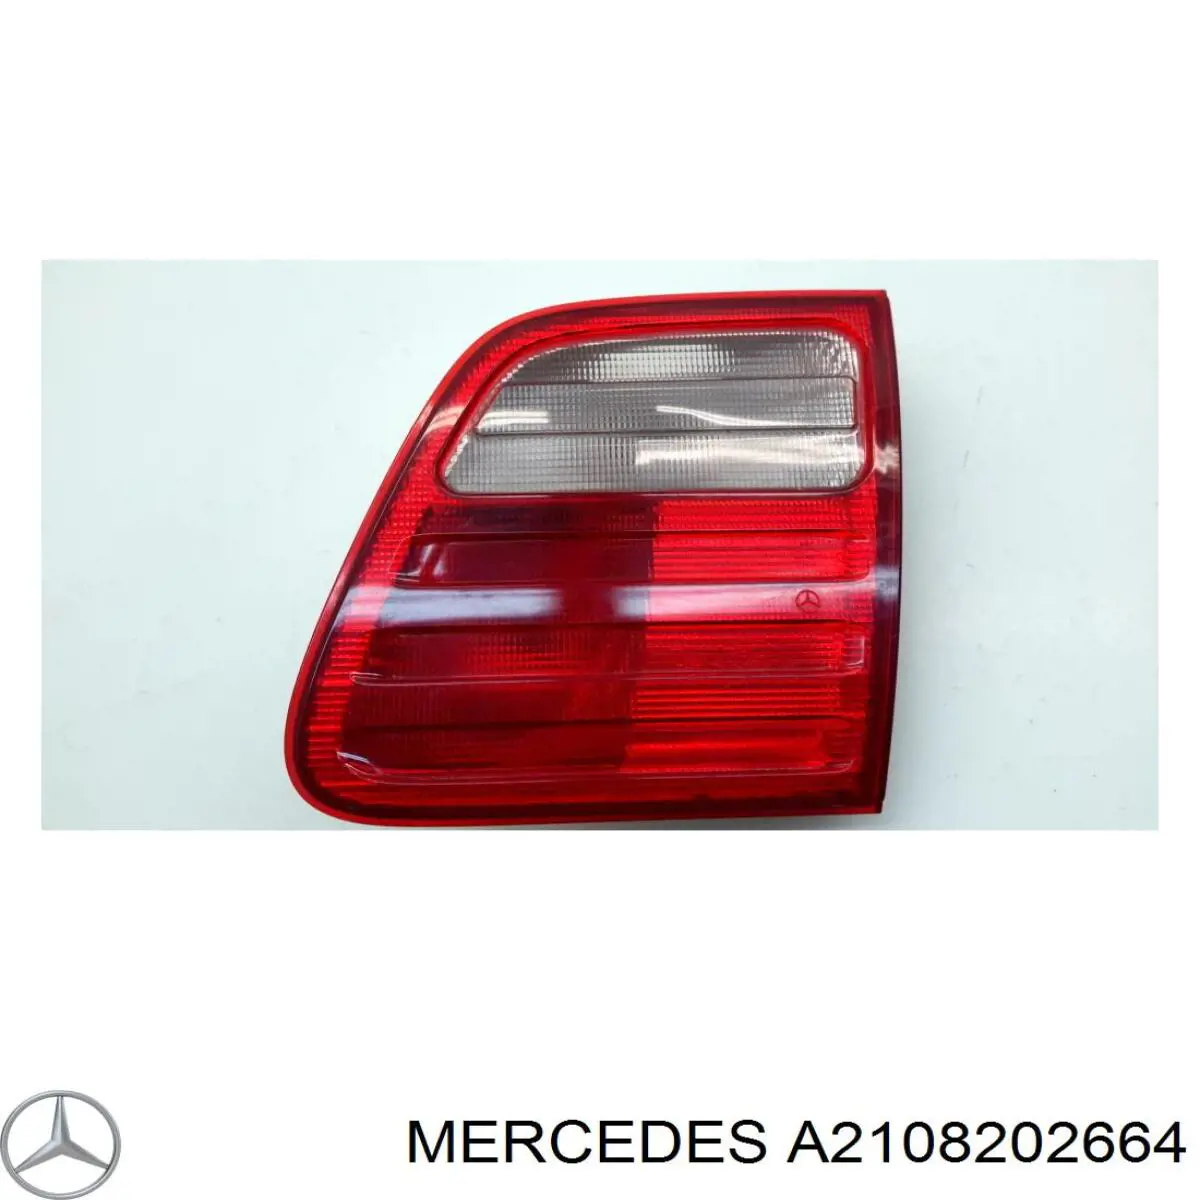 2108202664 Mercedes lanterna traseira direita interna